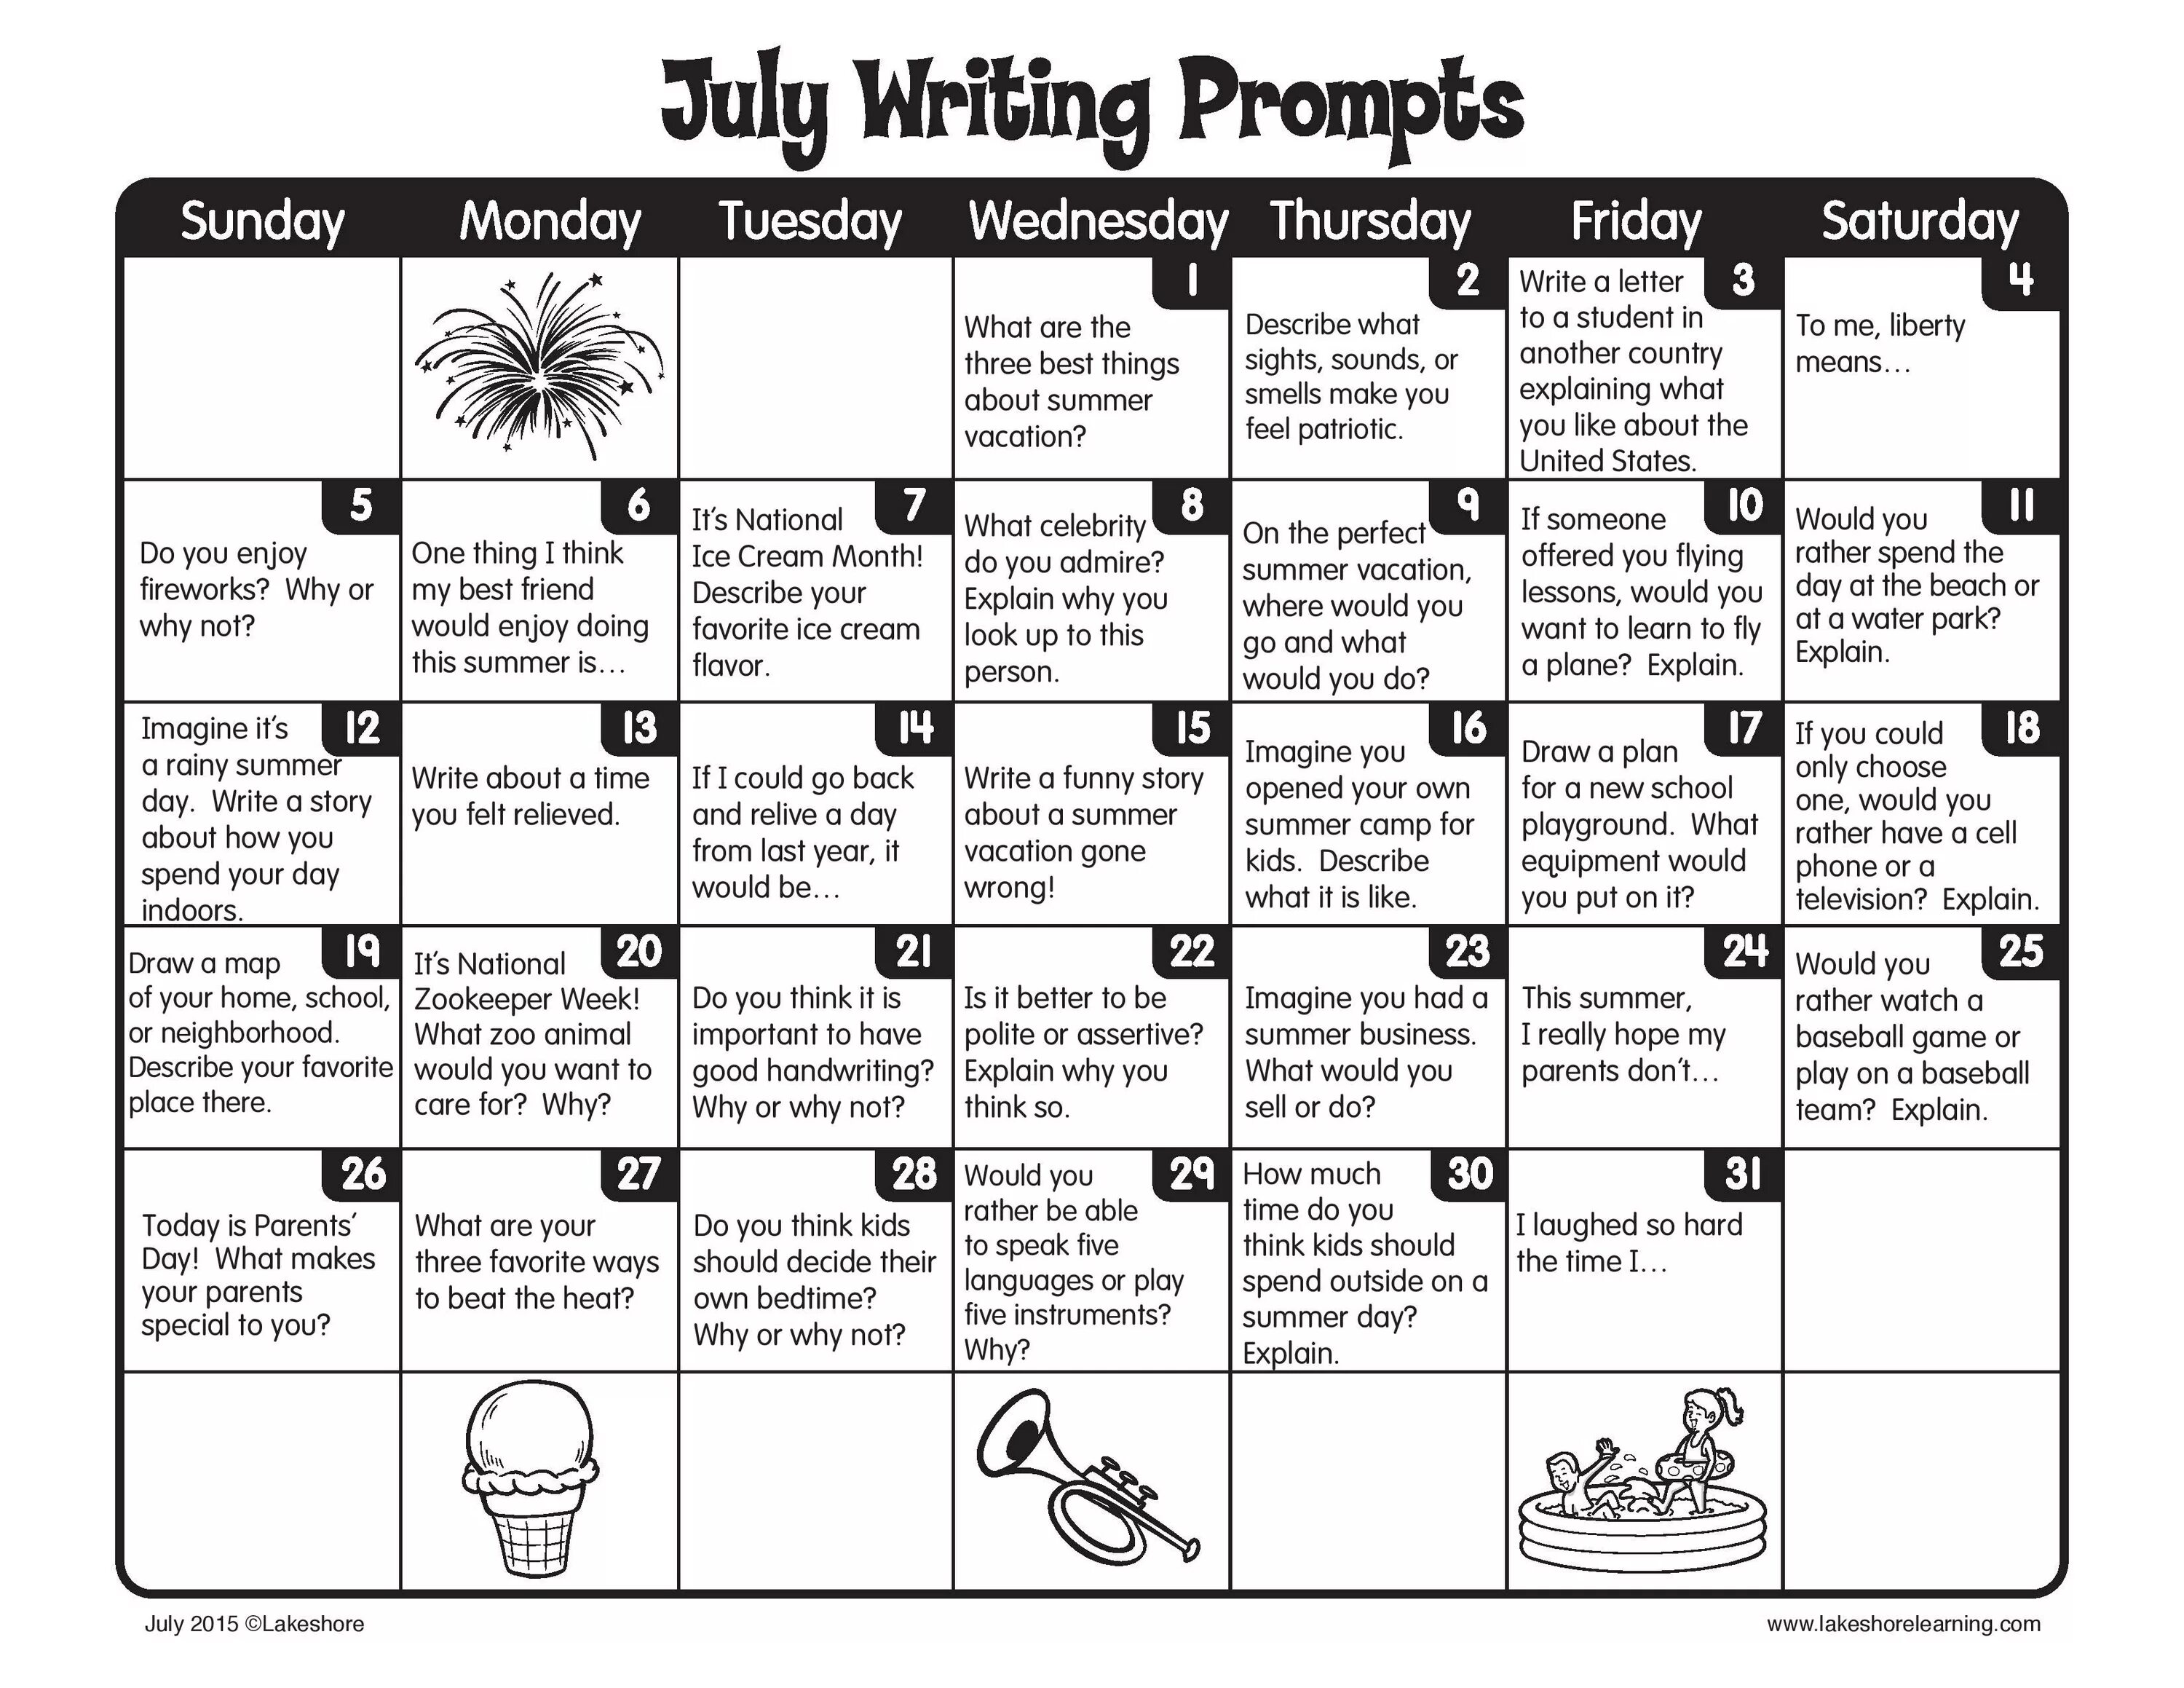 Writing prompts. Prompts в английском. Writing prompt for Kids. Summer writing. Imagine your best friend